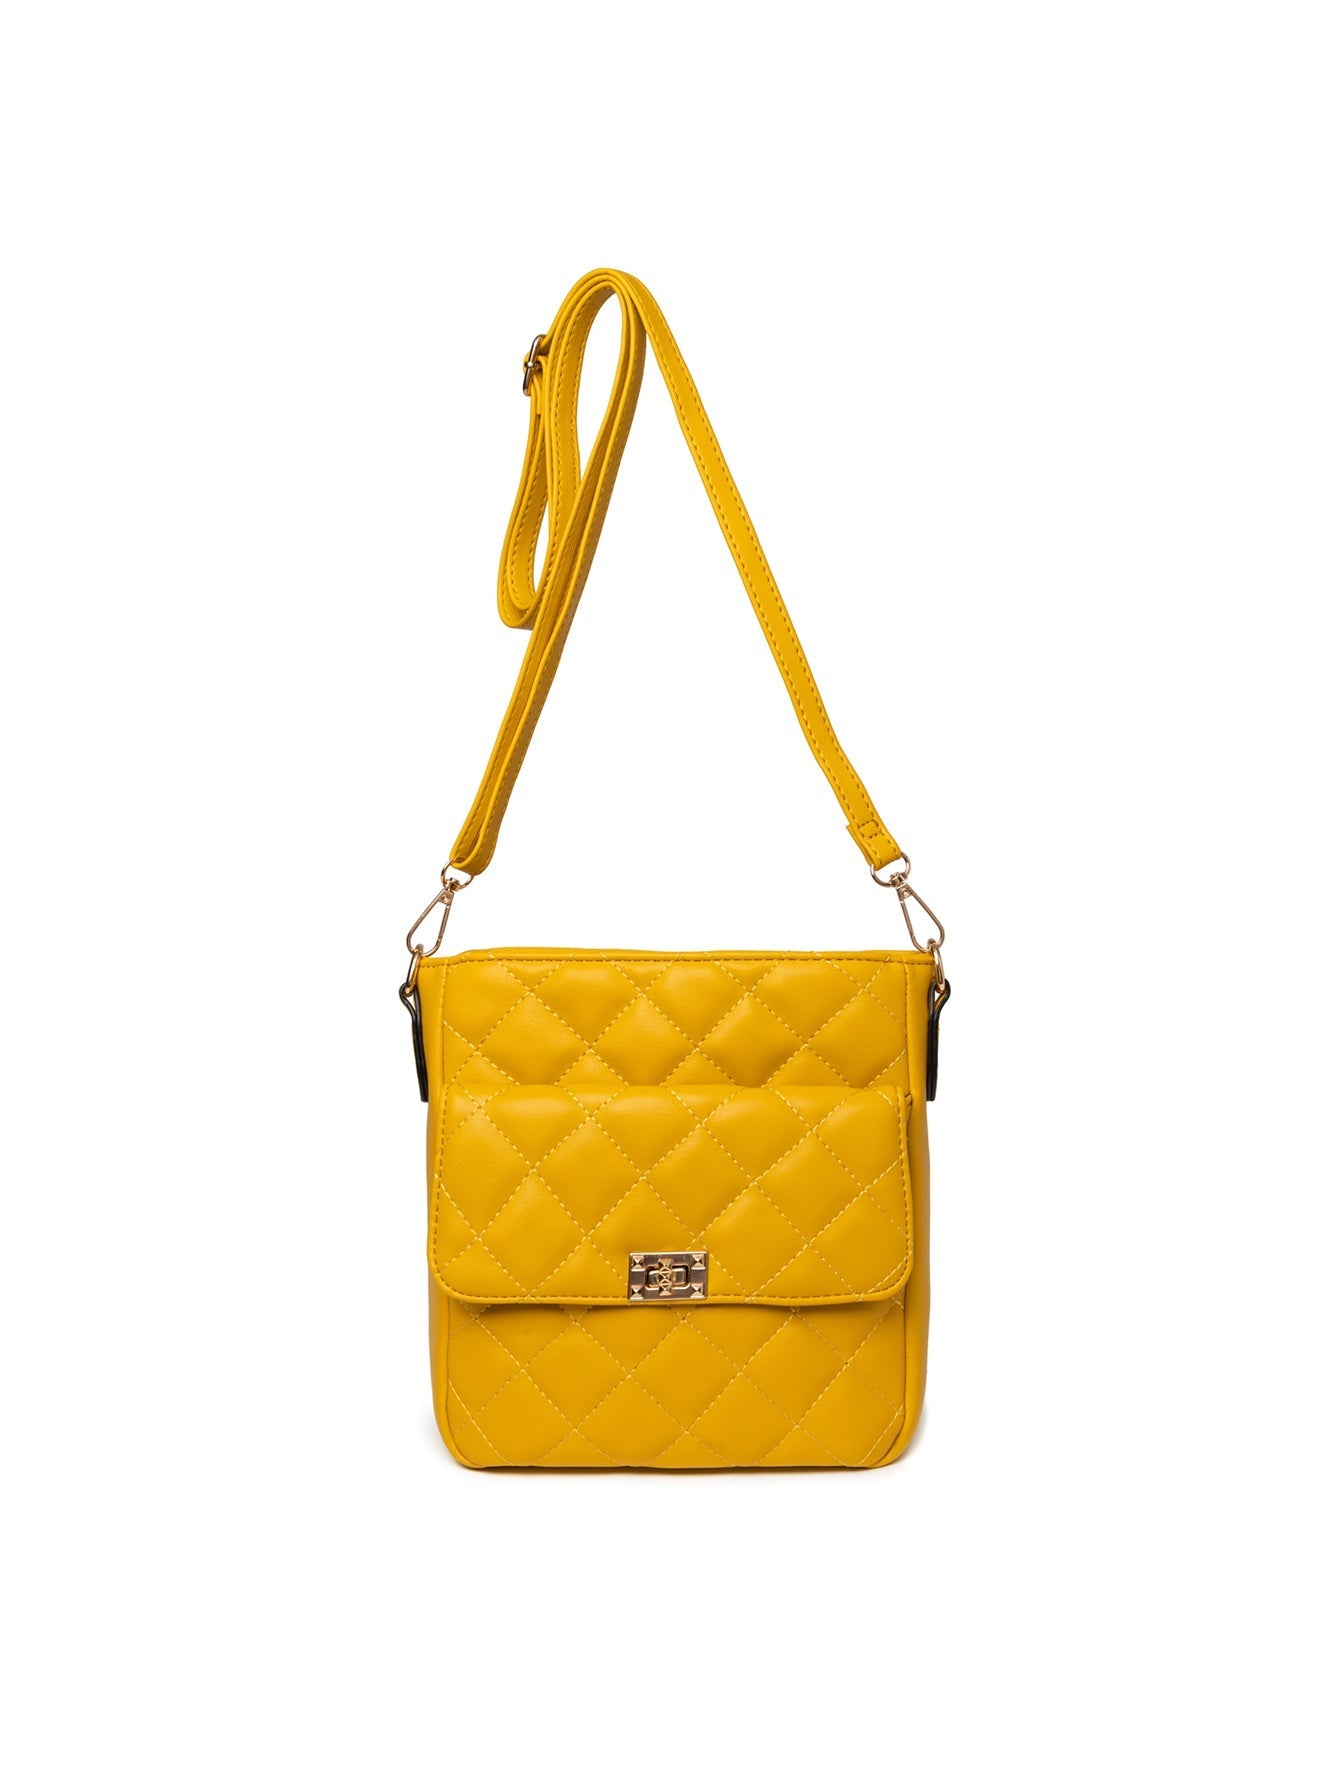 Women Soft PU Leather Shoulder Bag , Lightweight Crossbody Purse Pocketbooks Messenger Bag, Medium Size Sai Feel